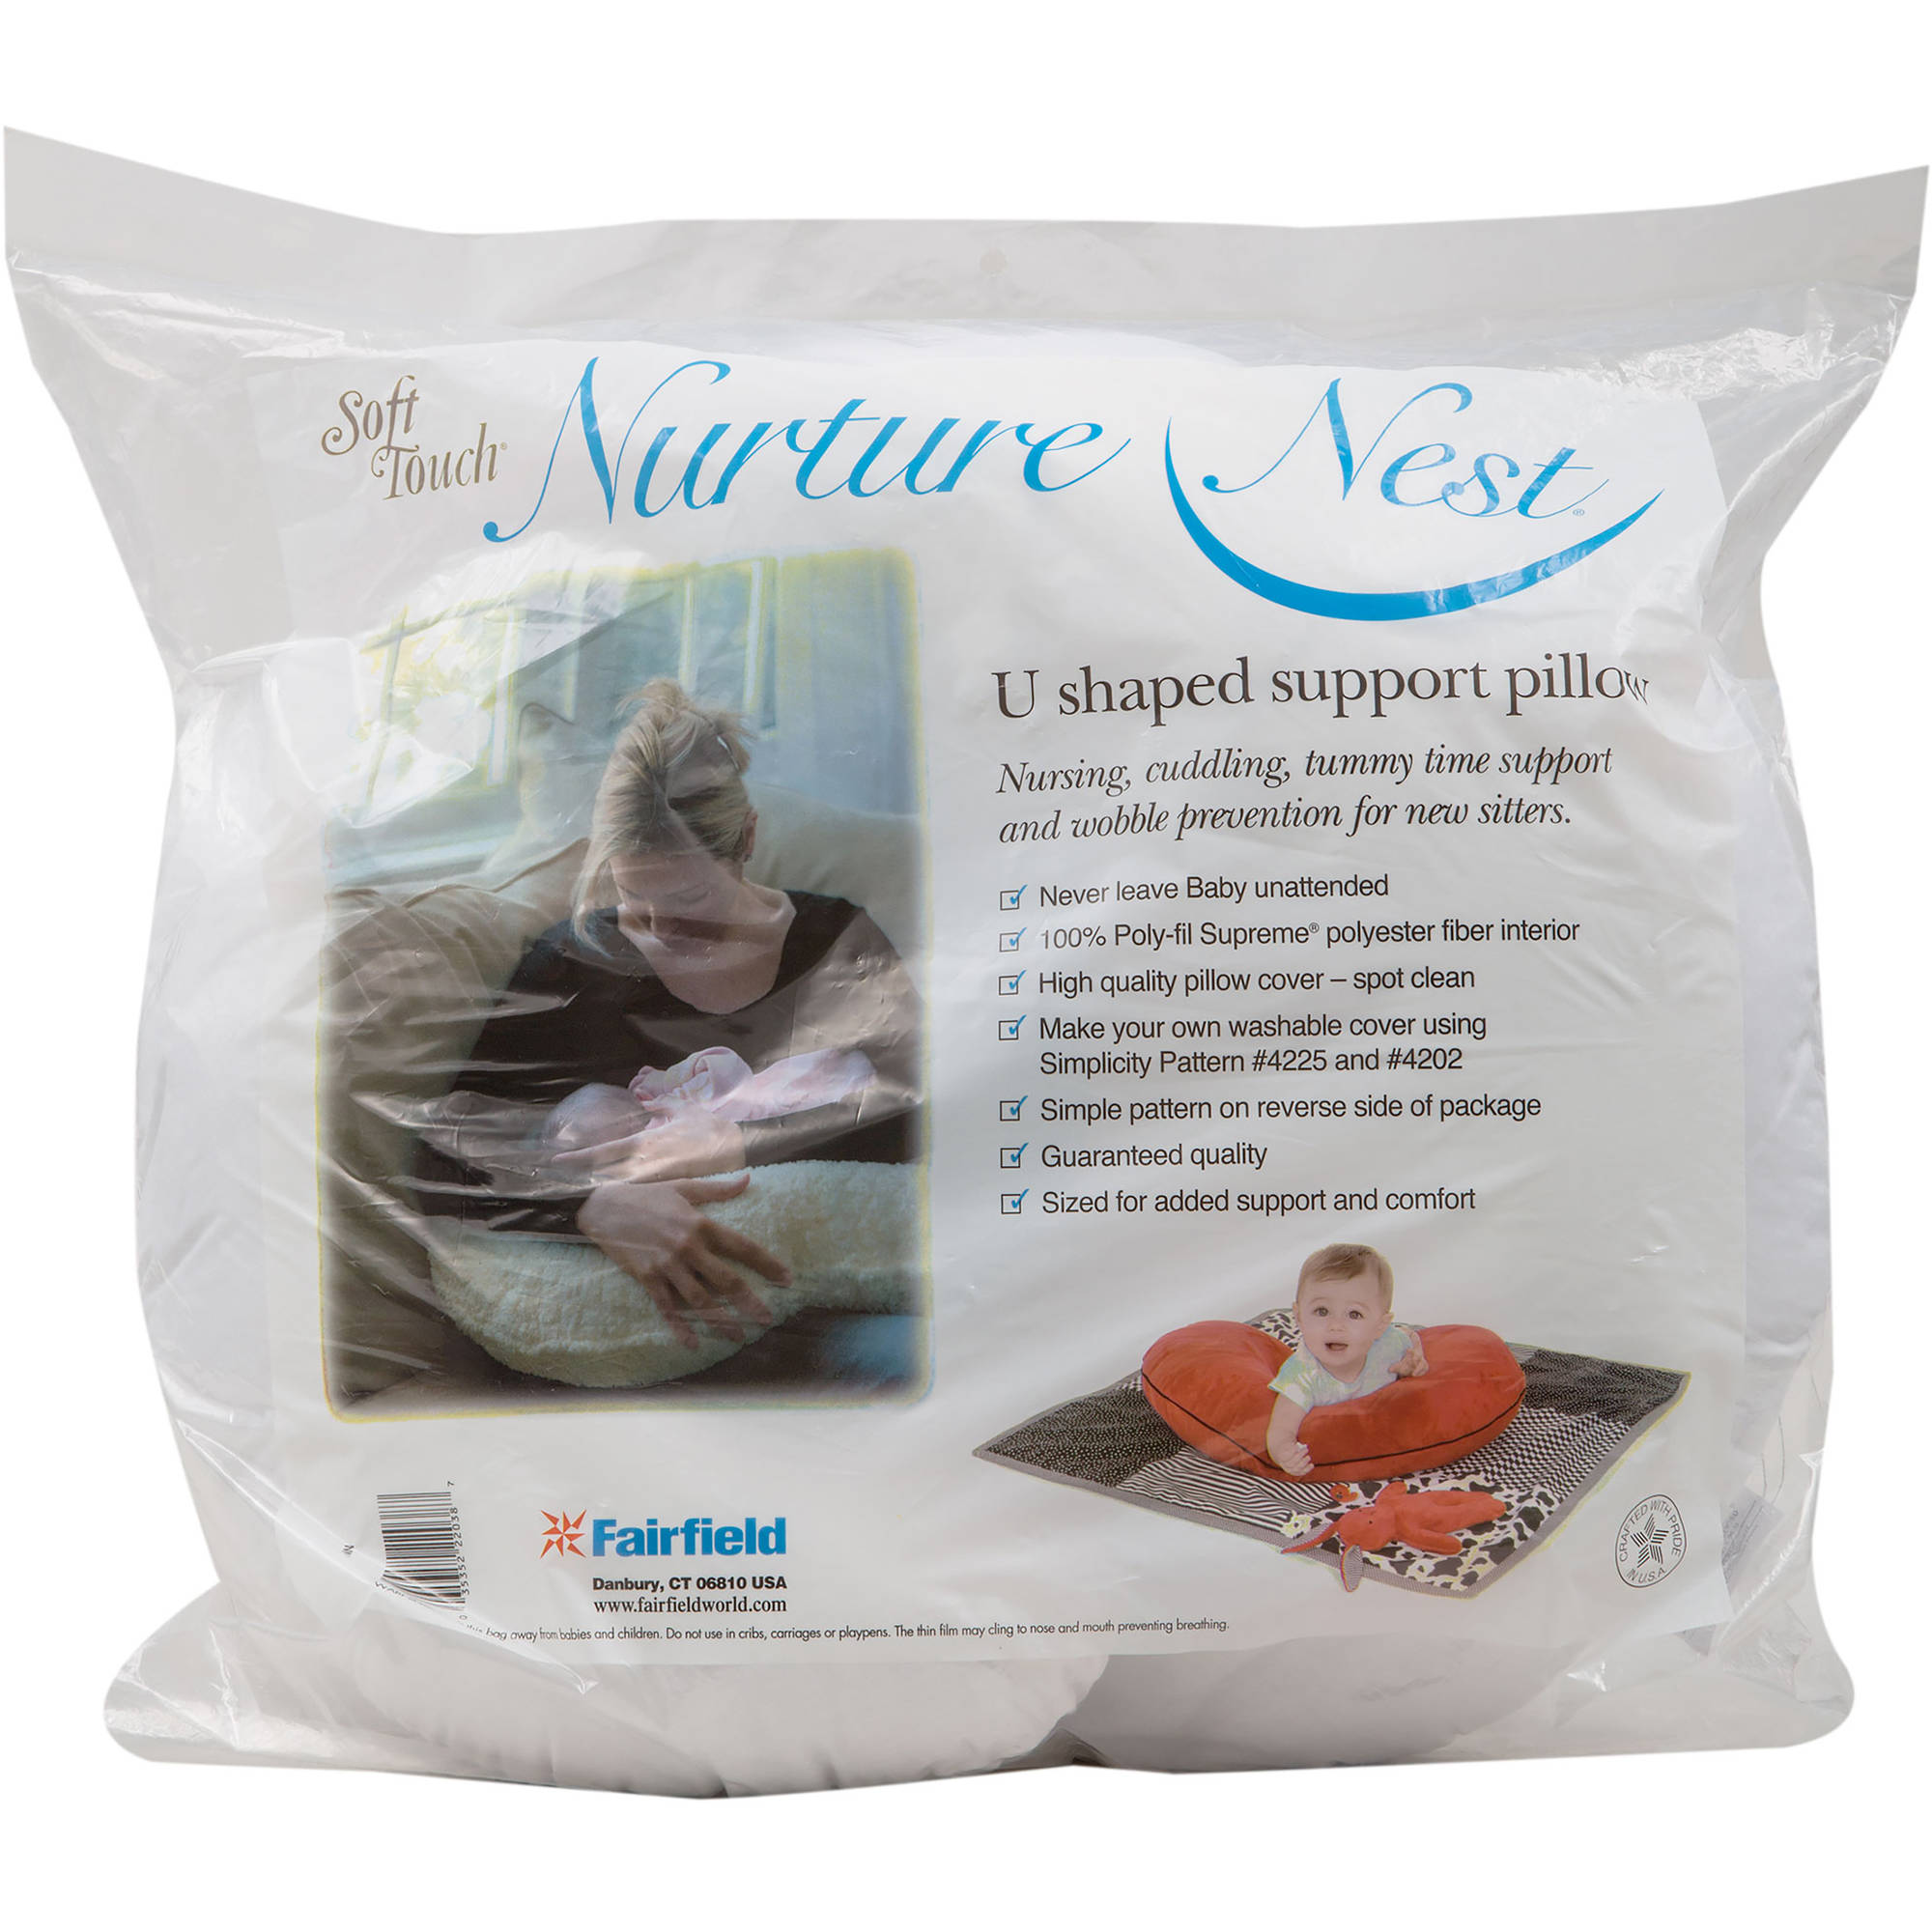 Nurture Nest Soft Touch U-Shaped Support Pillow - Walmart.com